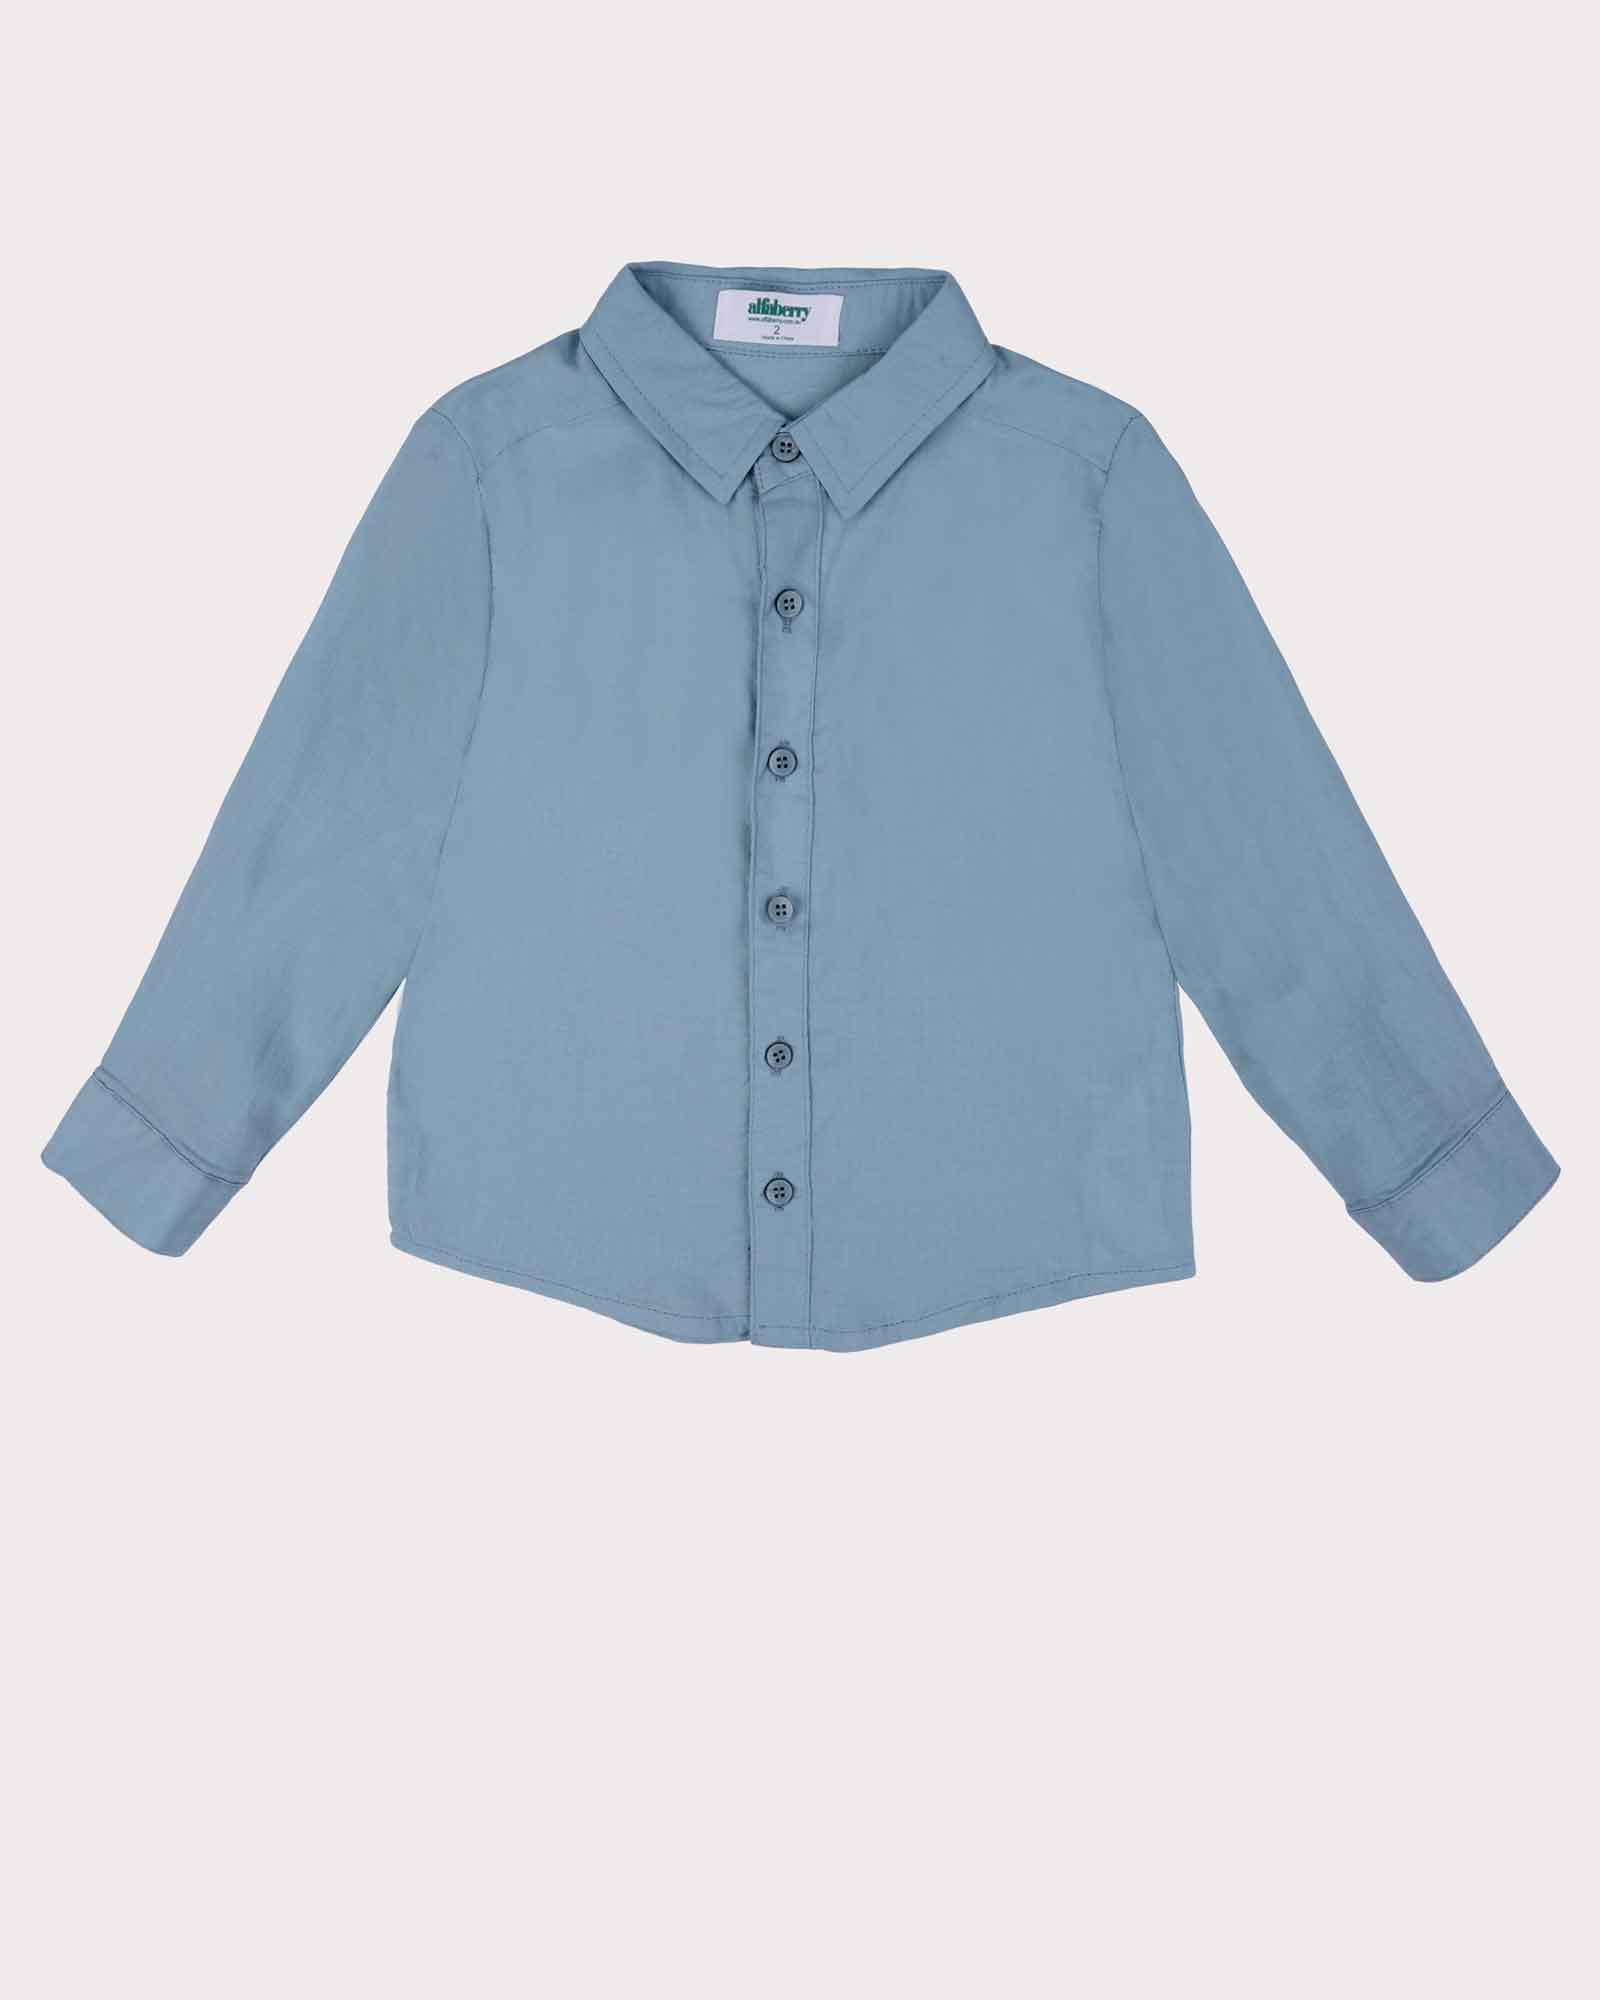 Linen Beach Shirt in Faded Blue Front